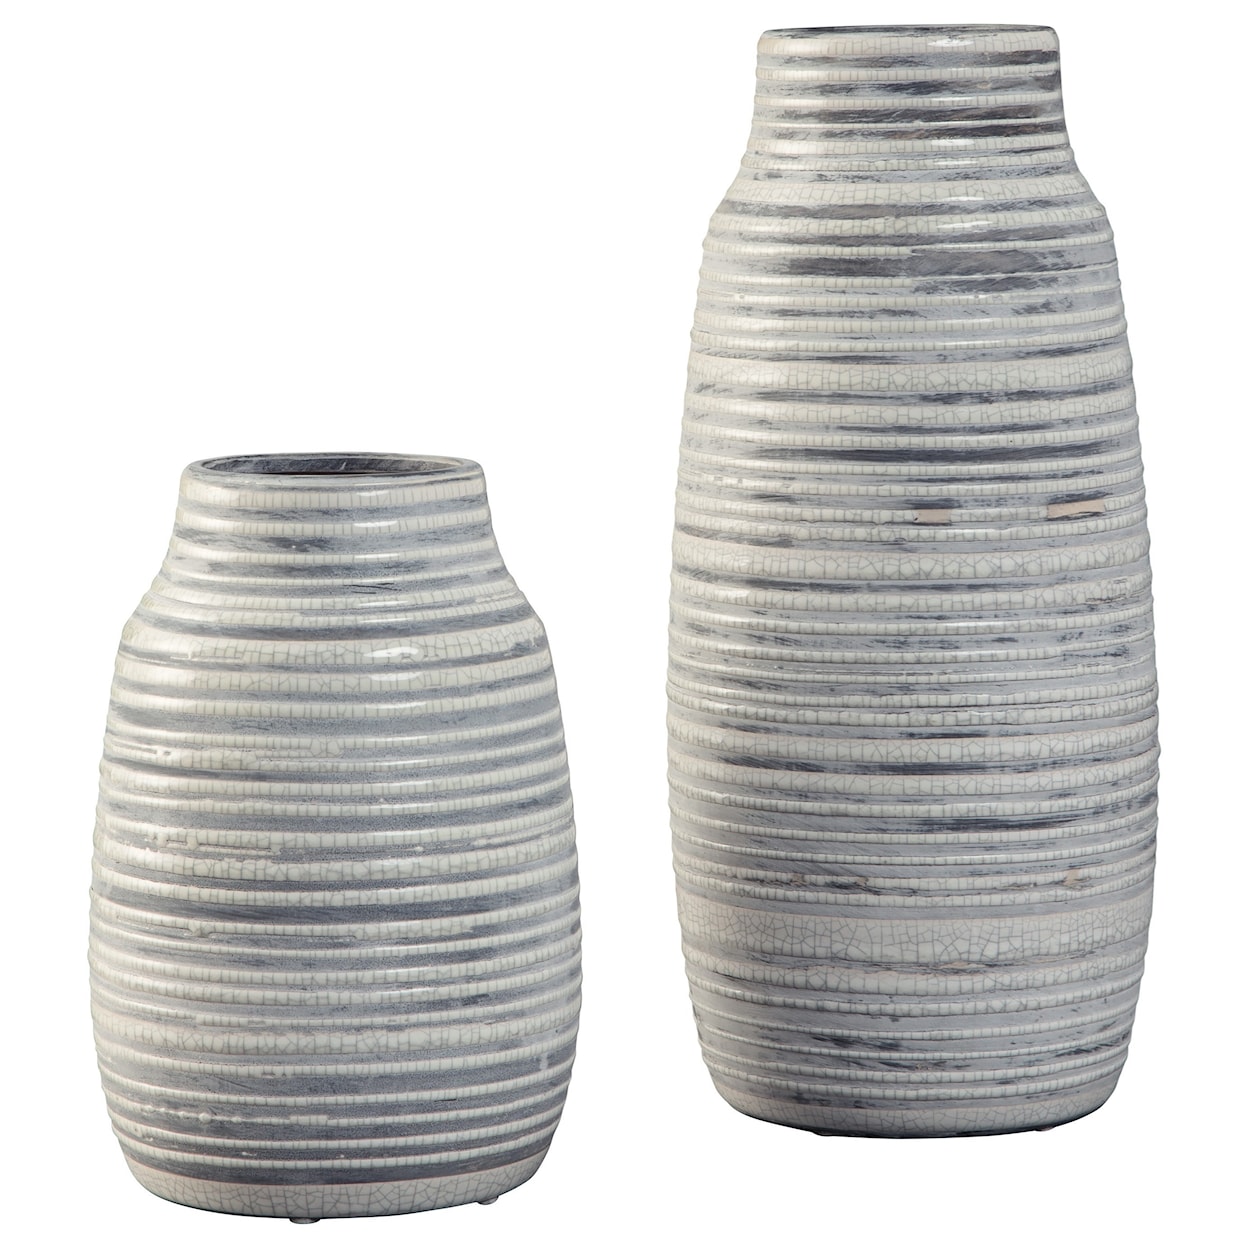 Signature Design by Ashley Accents Donaver Gray/White Vase Set